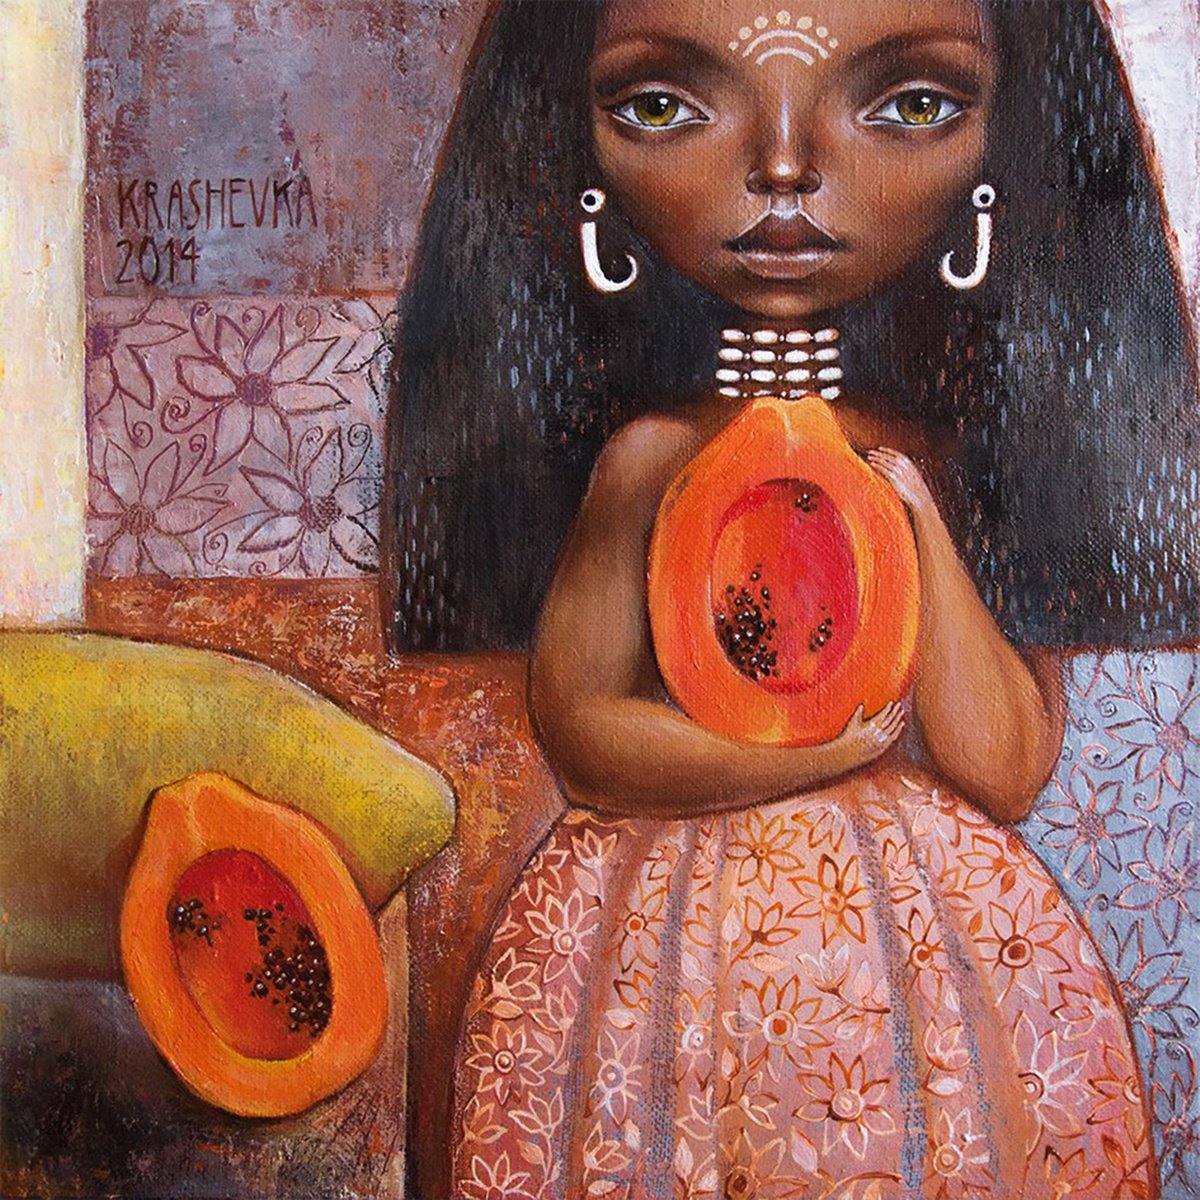 Papaya-girl in India by Lena Krashevka